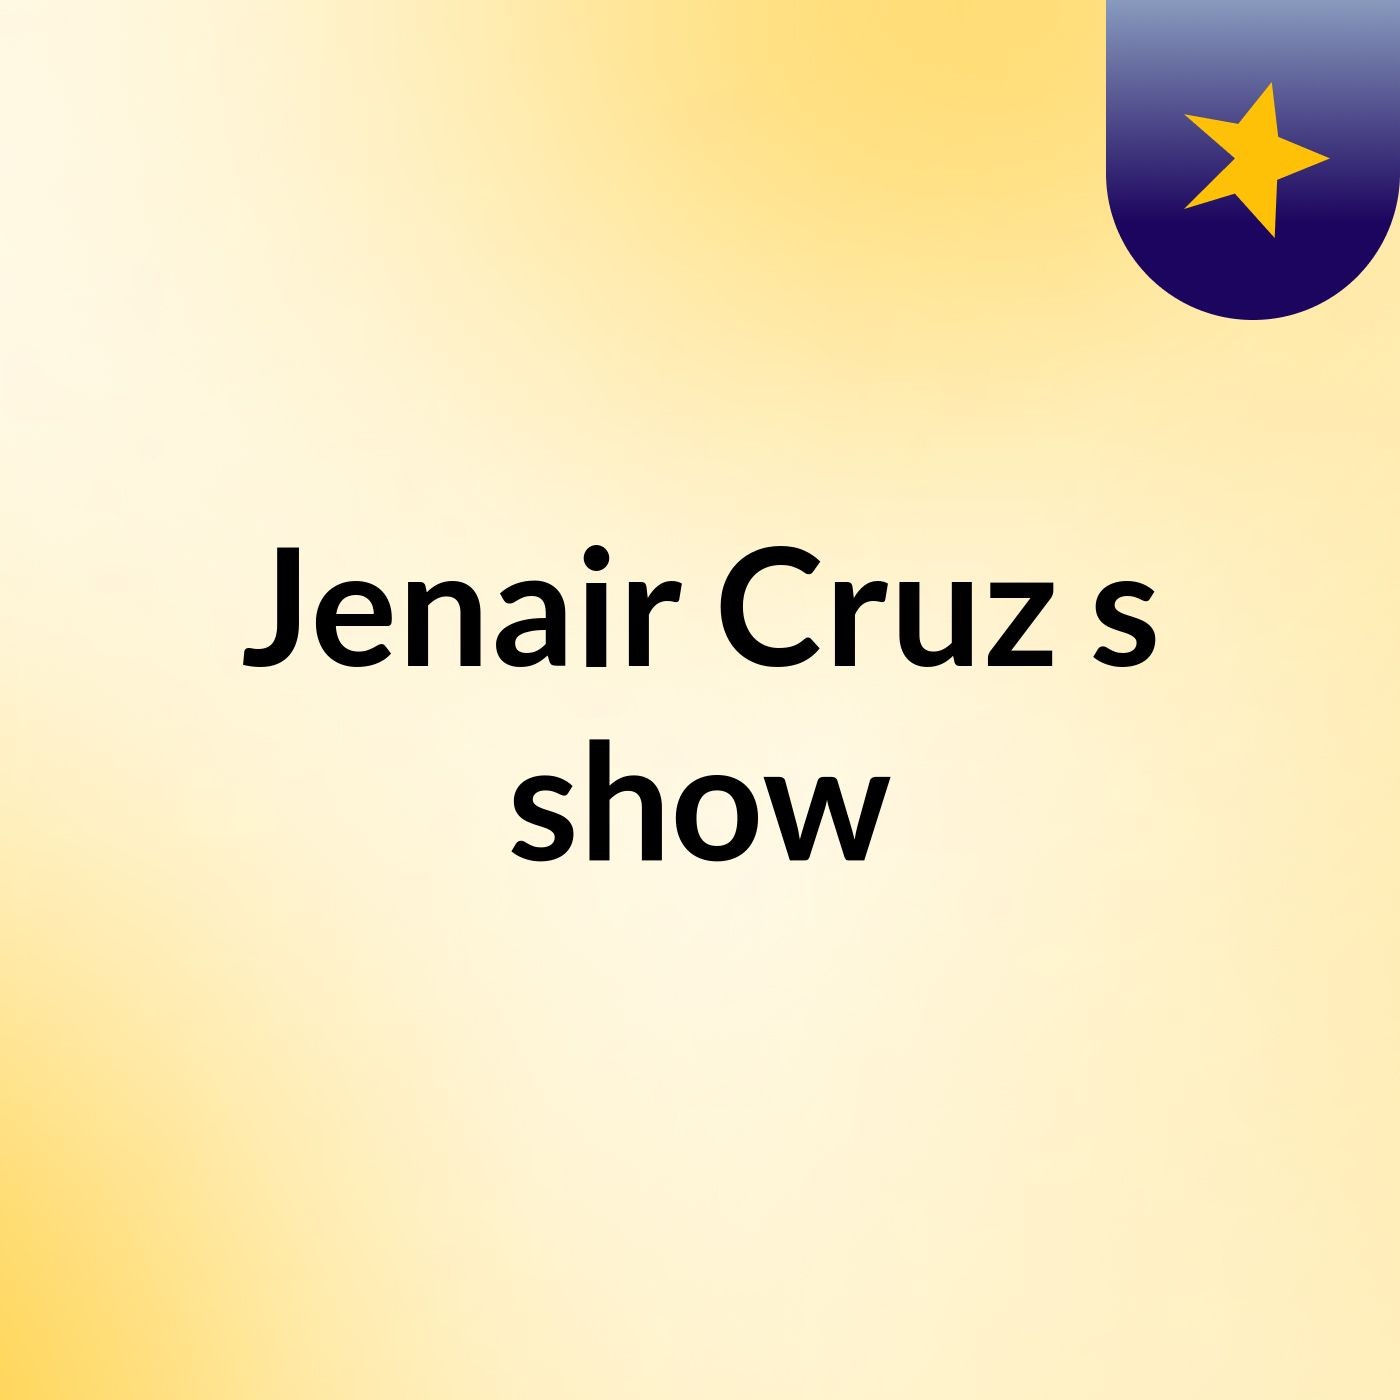 Jenair Cruz's show